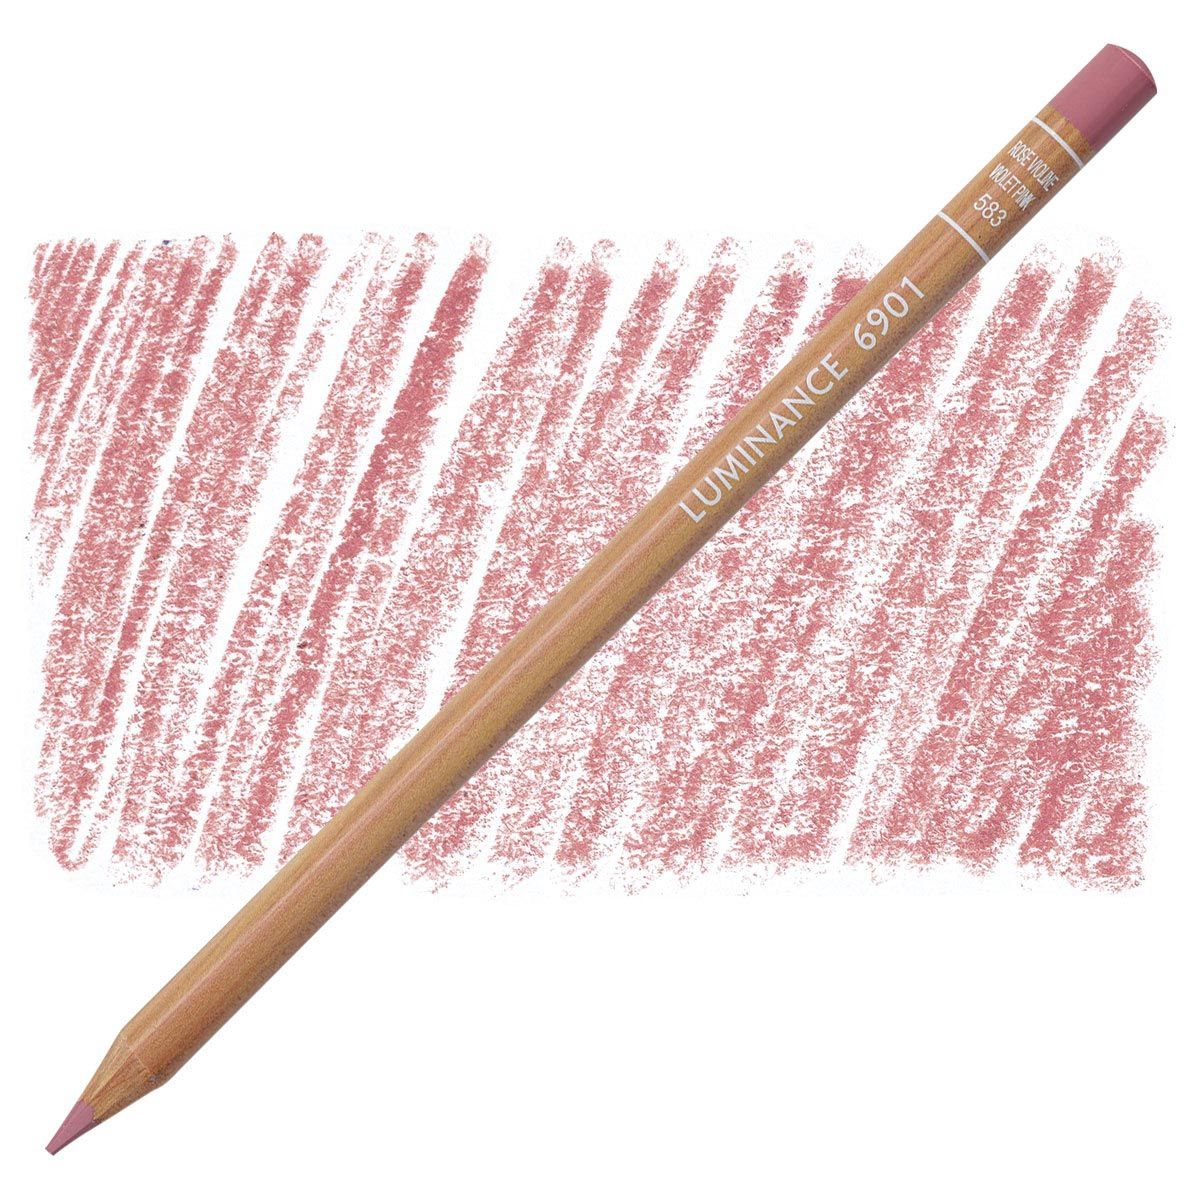 Caran d'Ache Luminance 6901 Pencil - 583 Violet Pink